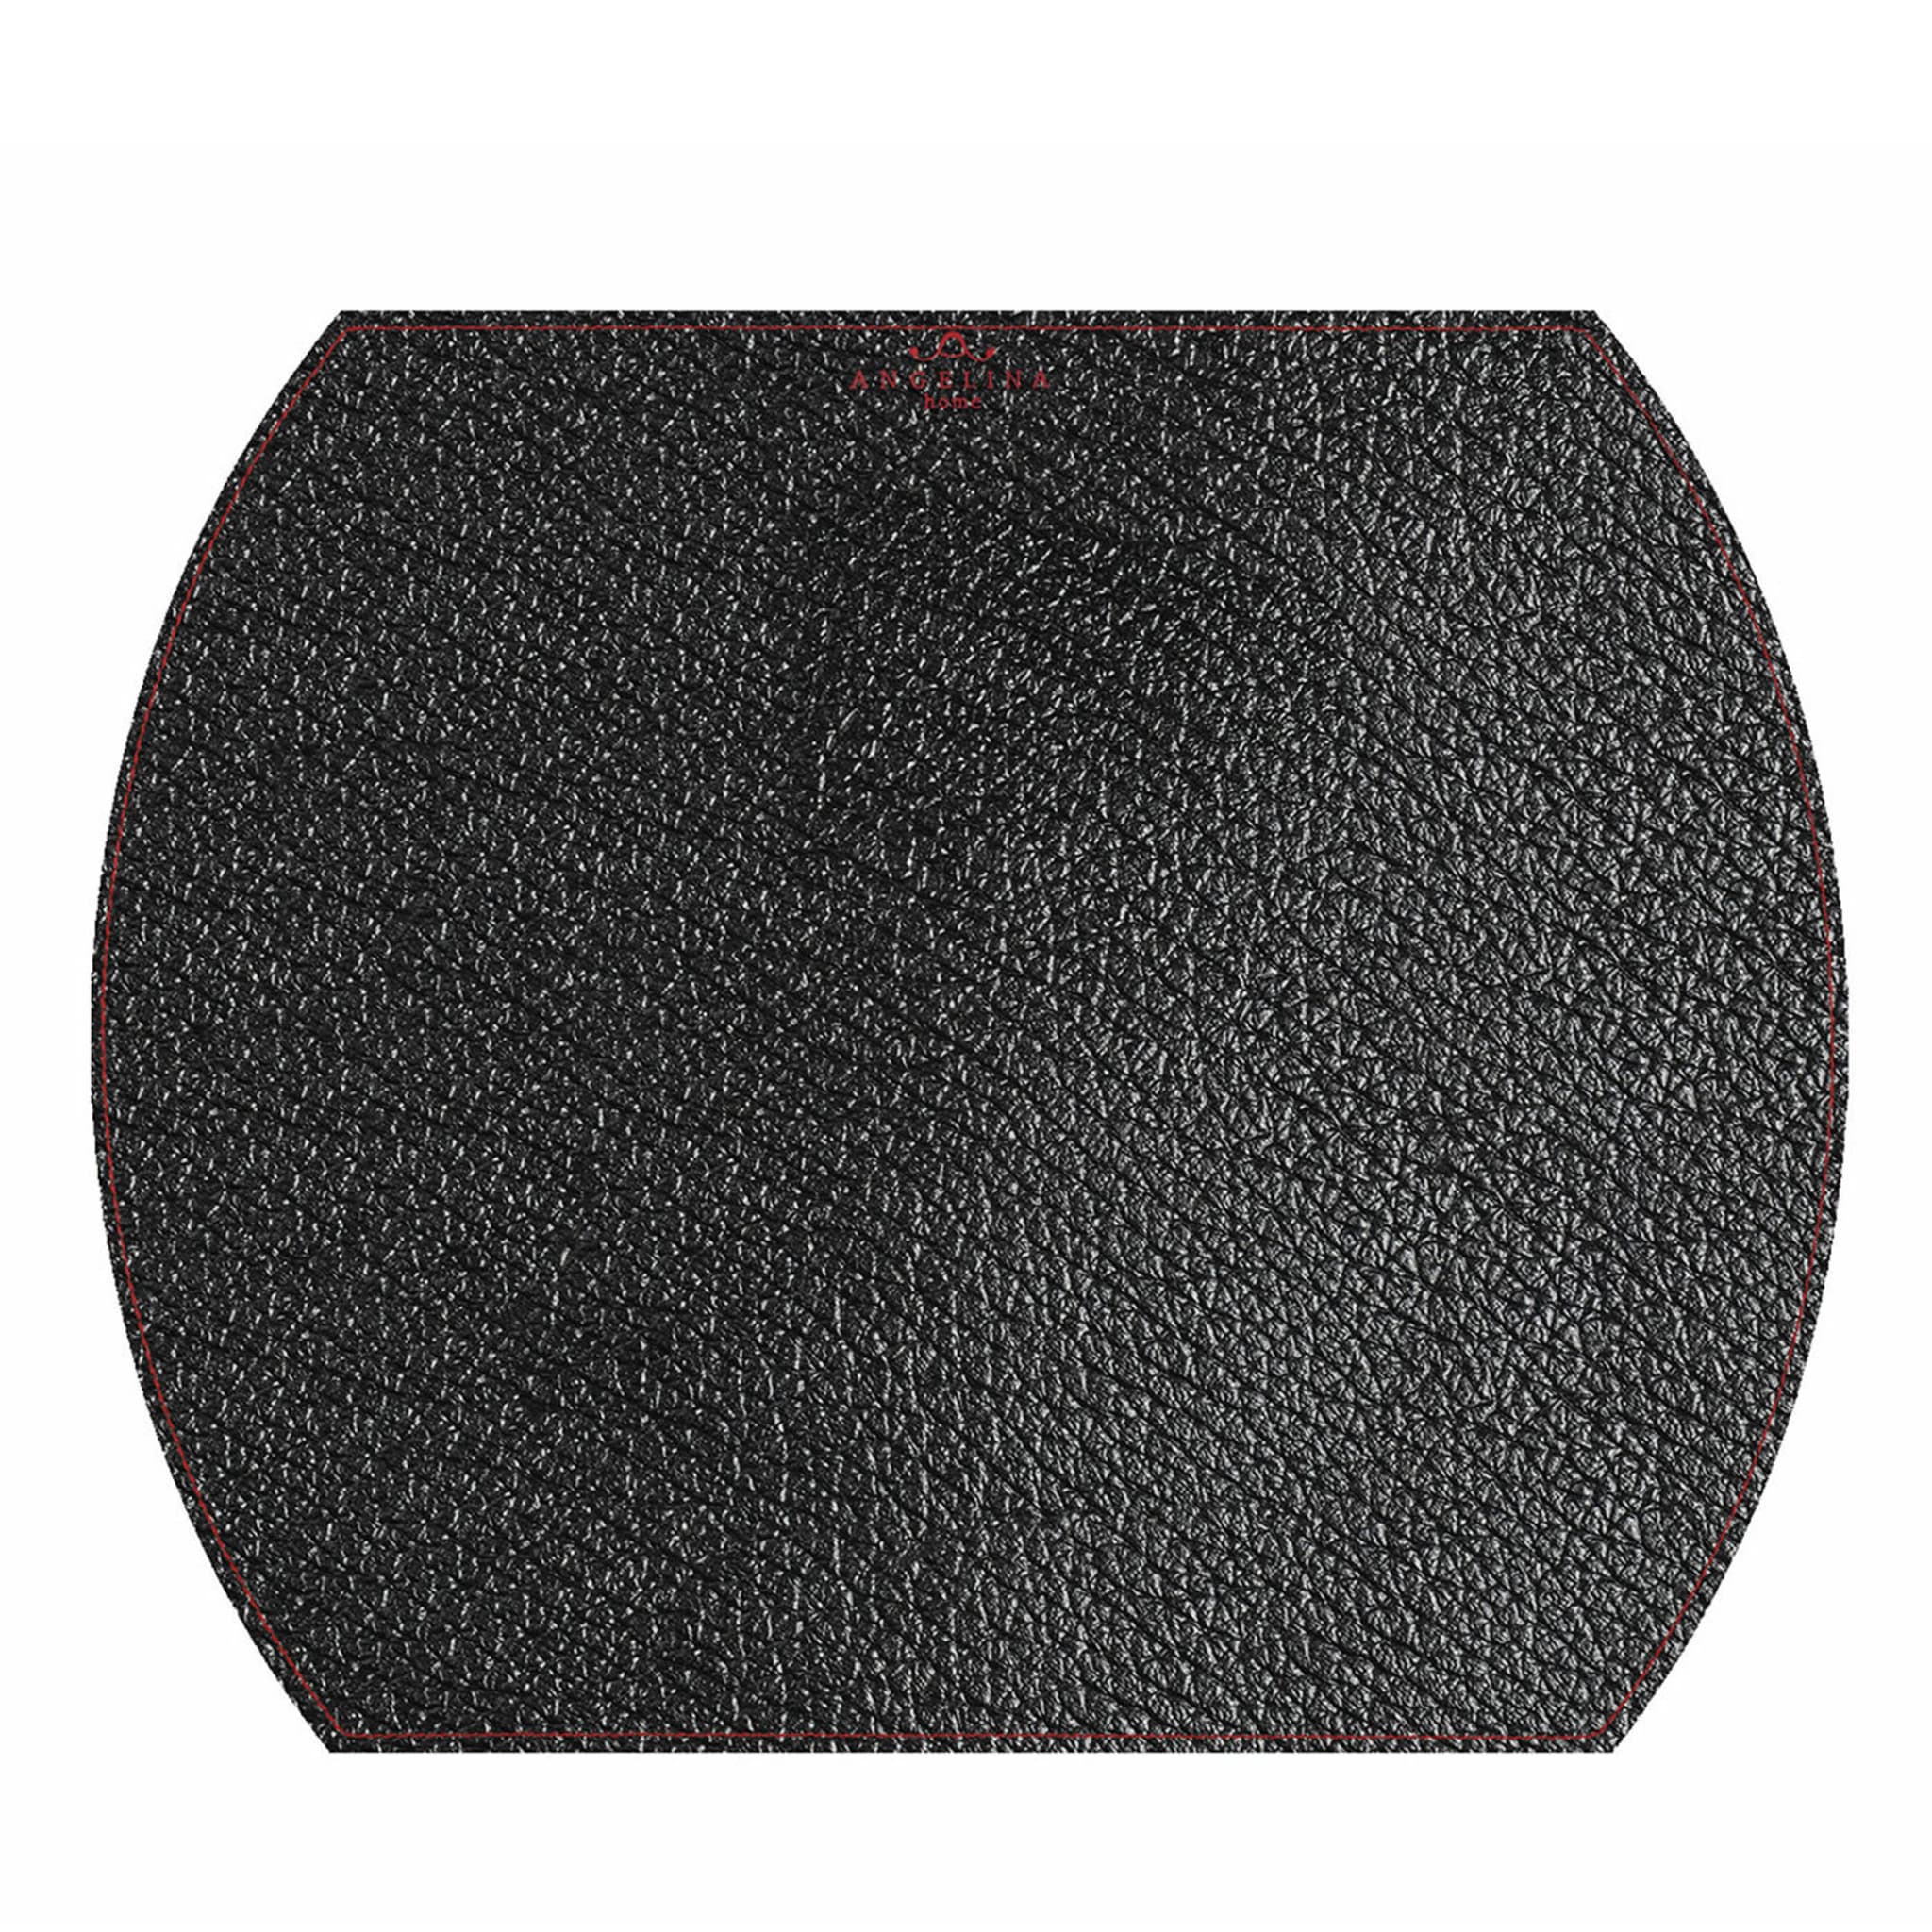 Tanzania Medium Set of 2 Black Leather Placemats - Alternative view 2